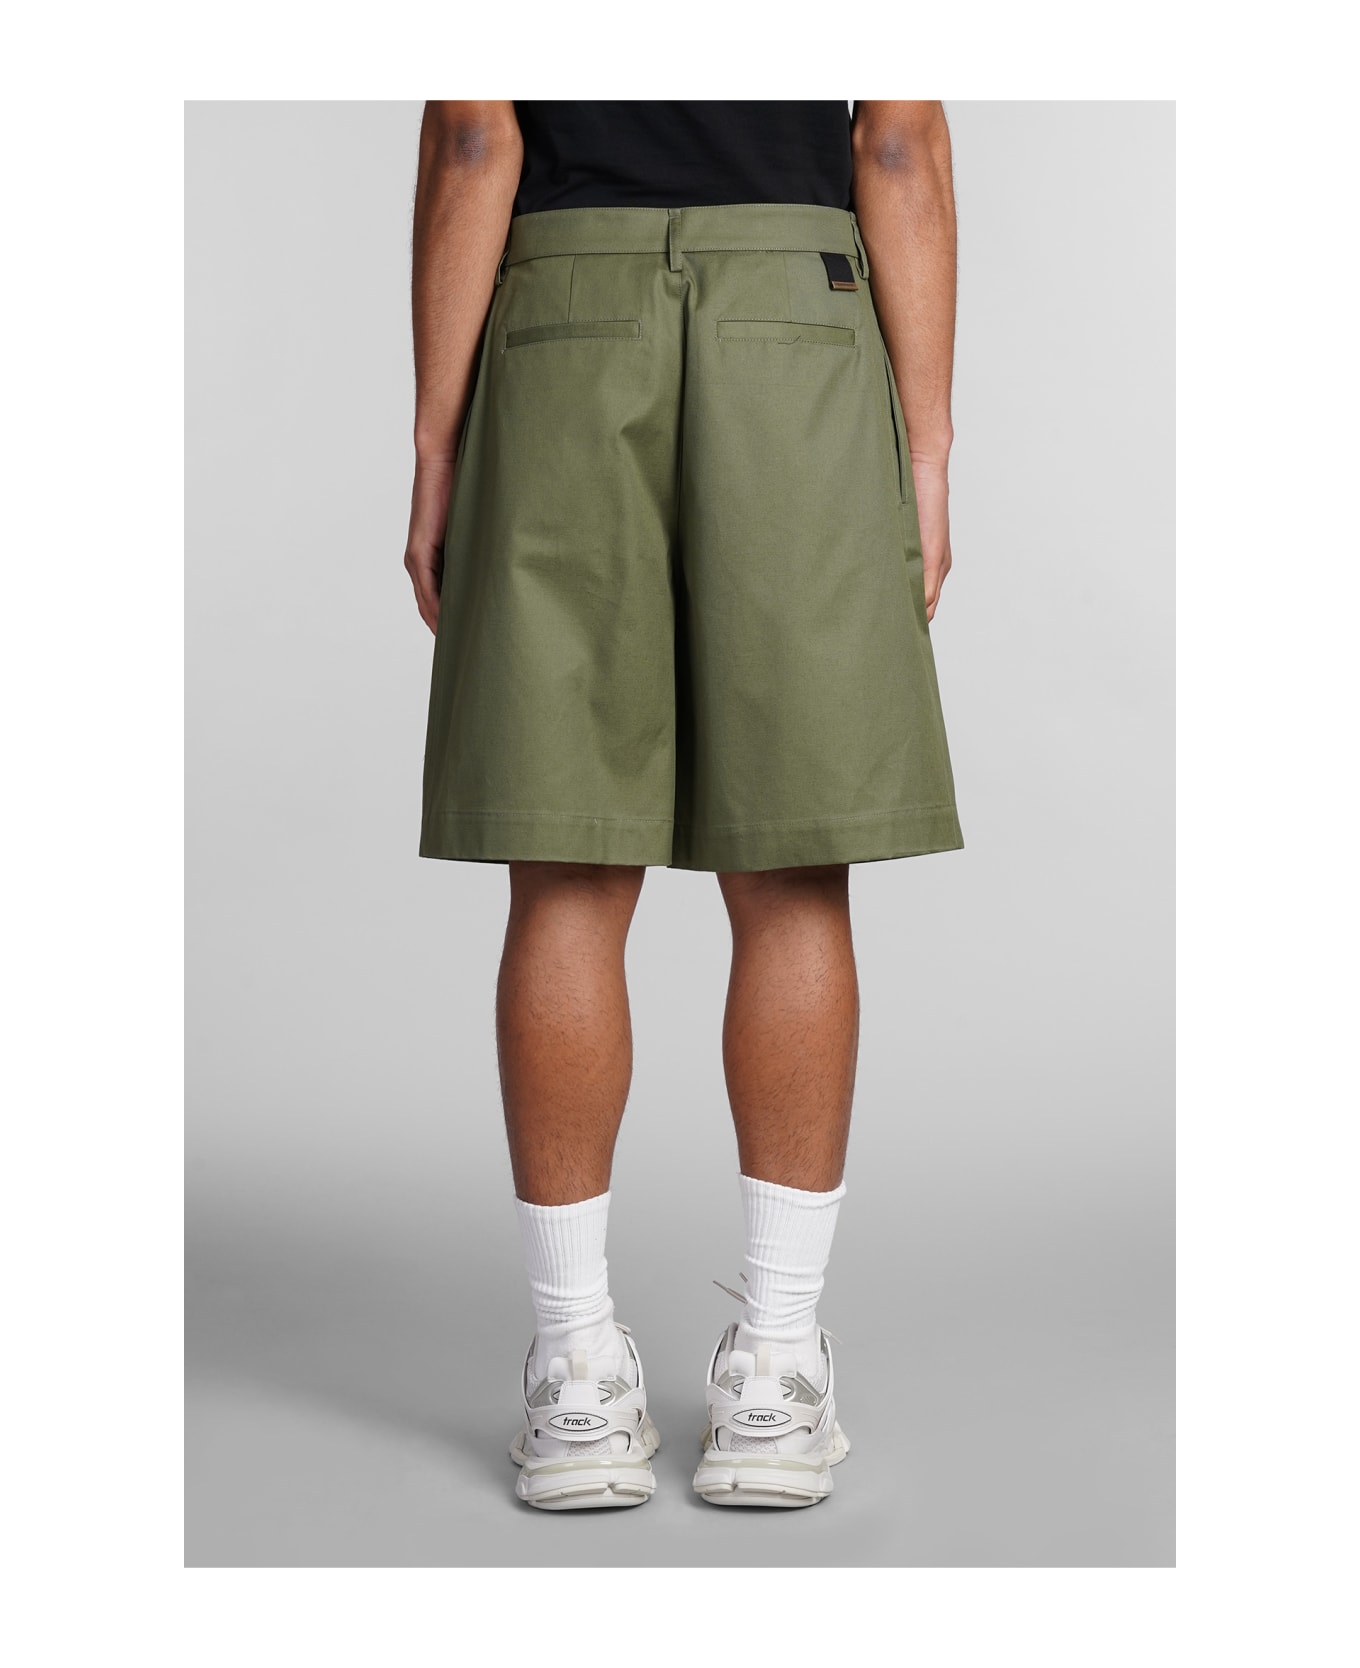 DARKPARK Saint Shorts In Green Cotton - green